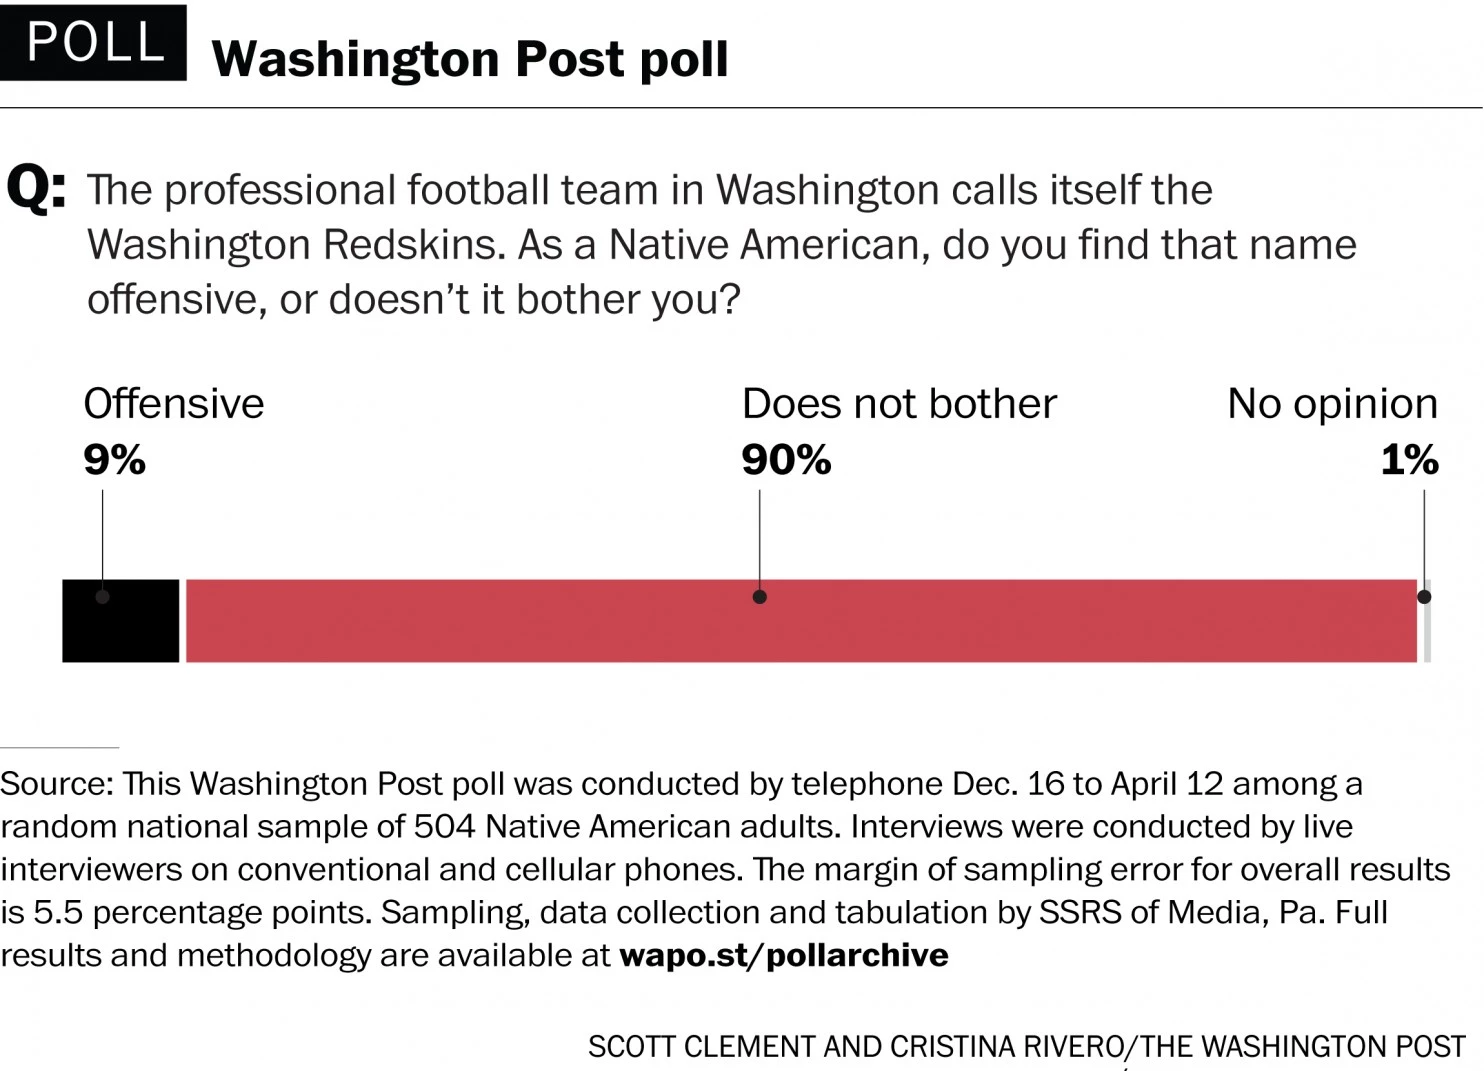 Washington Post Poll Redskins